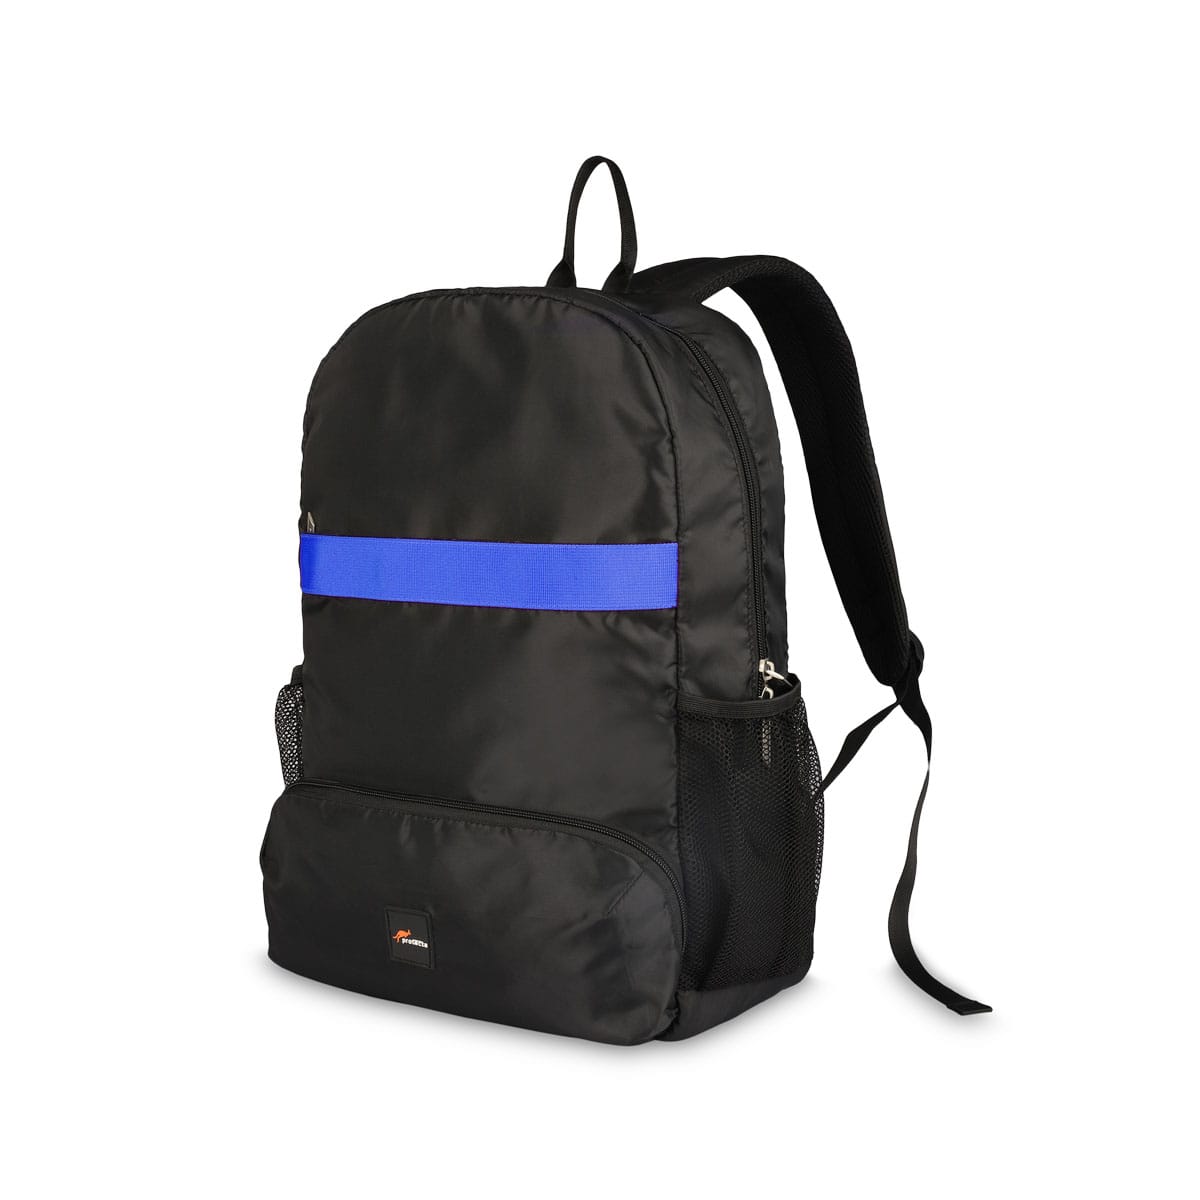 Black-Blue | Protecta Triumph Laptop Backpack-1